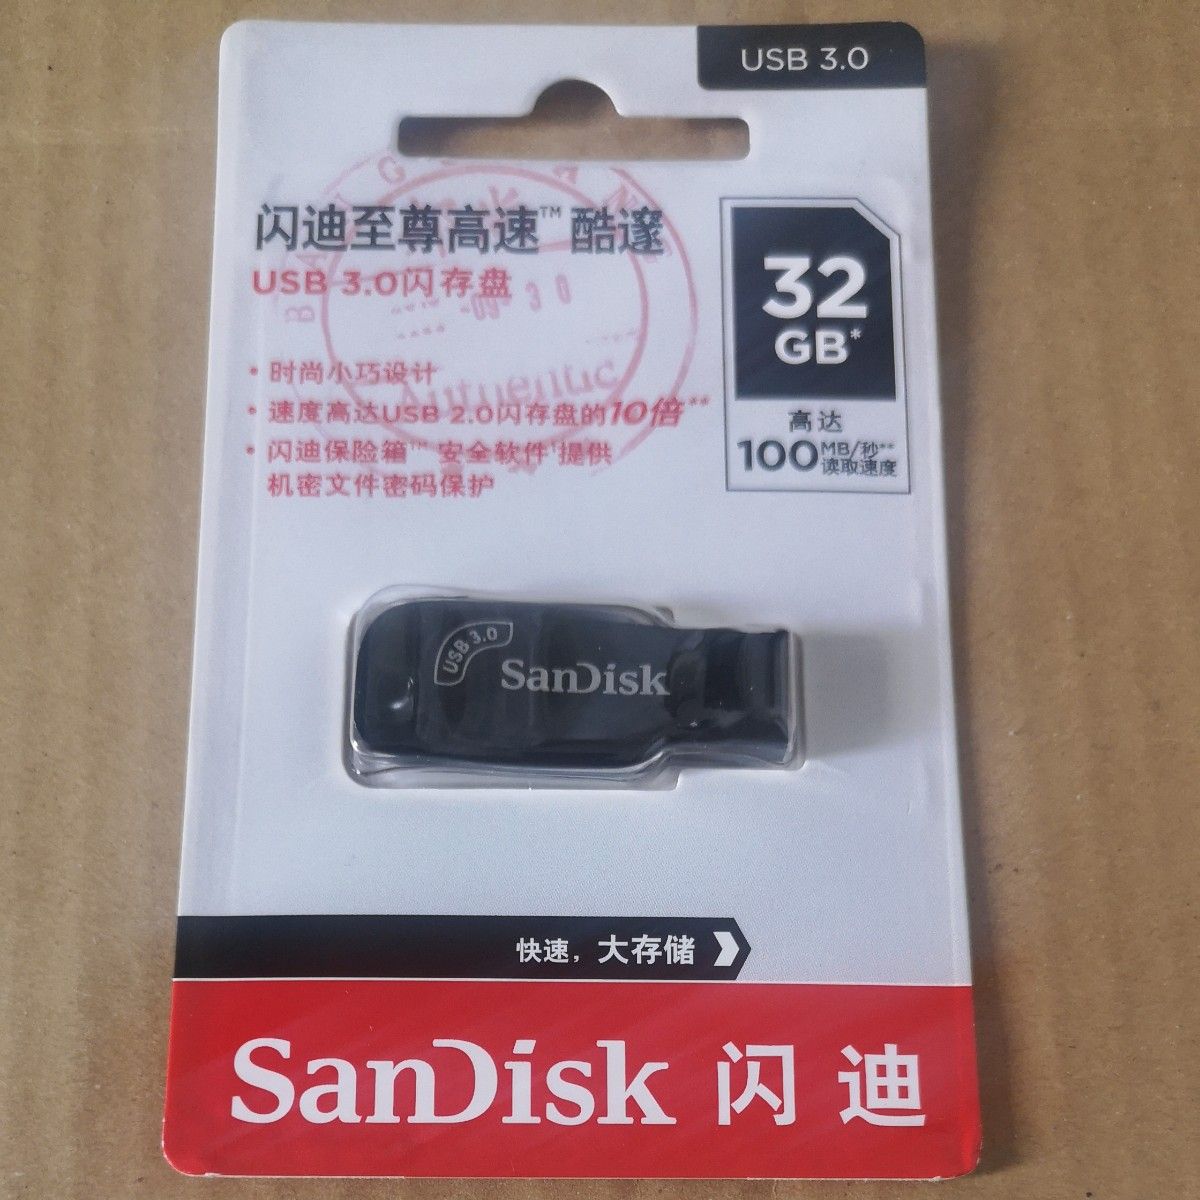 USBメモリ 32GB USB3.0 SanDisk サンディスク Ultra Shift R:100MB/s 海外リテール